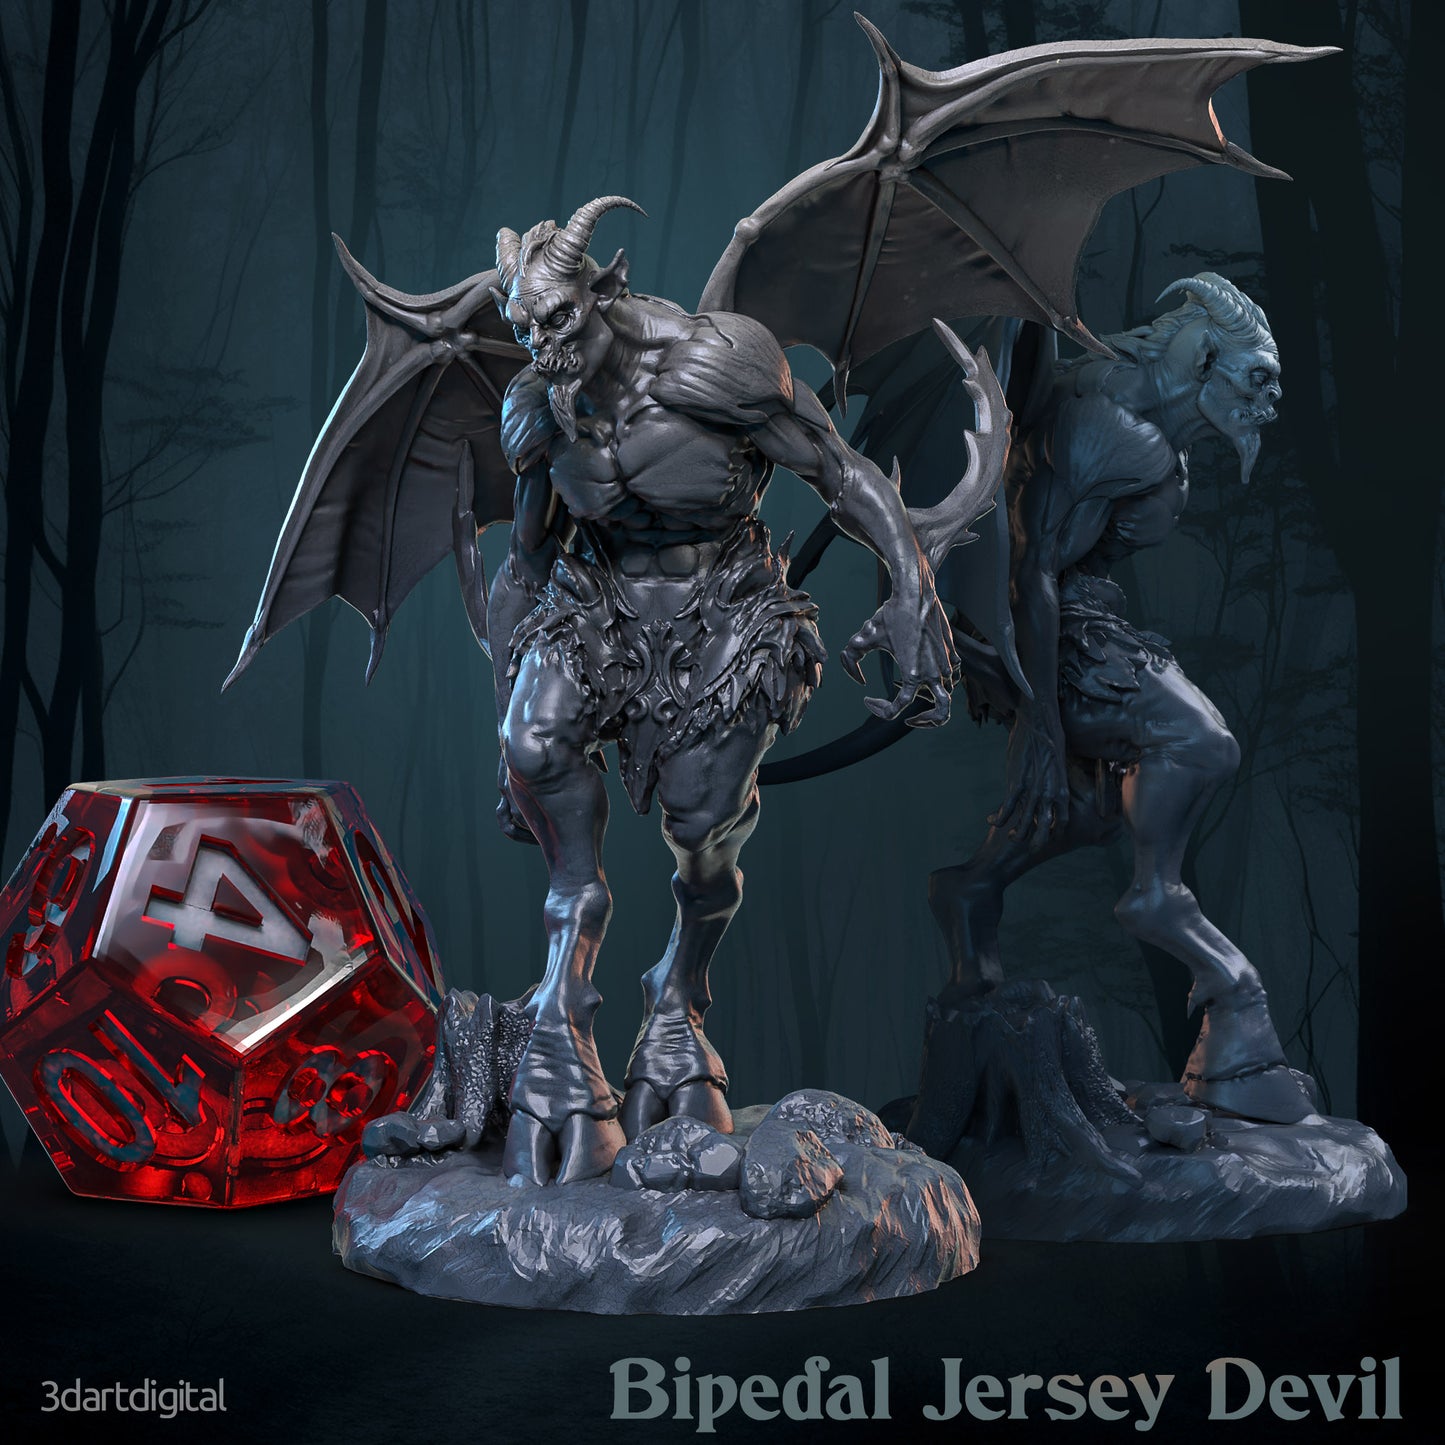 Jersey Devil, Bipedal